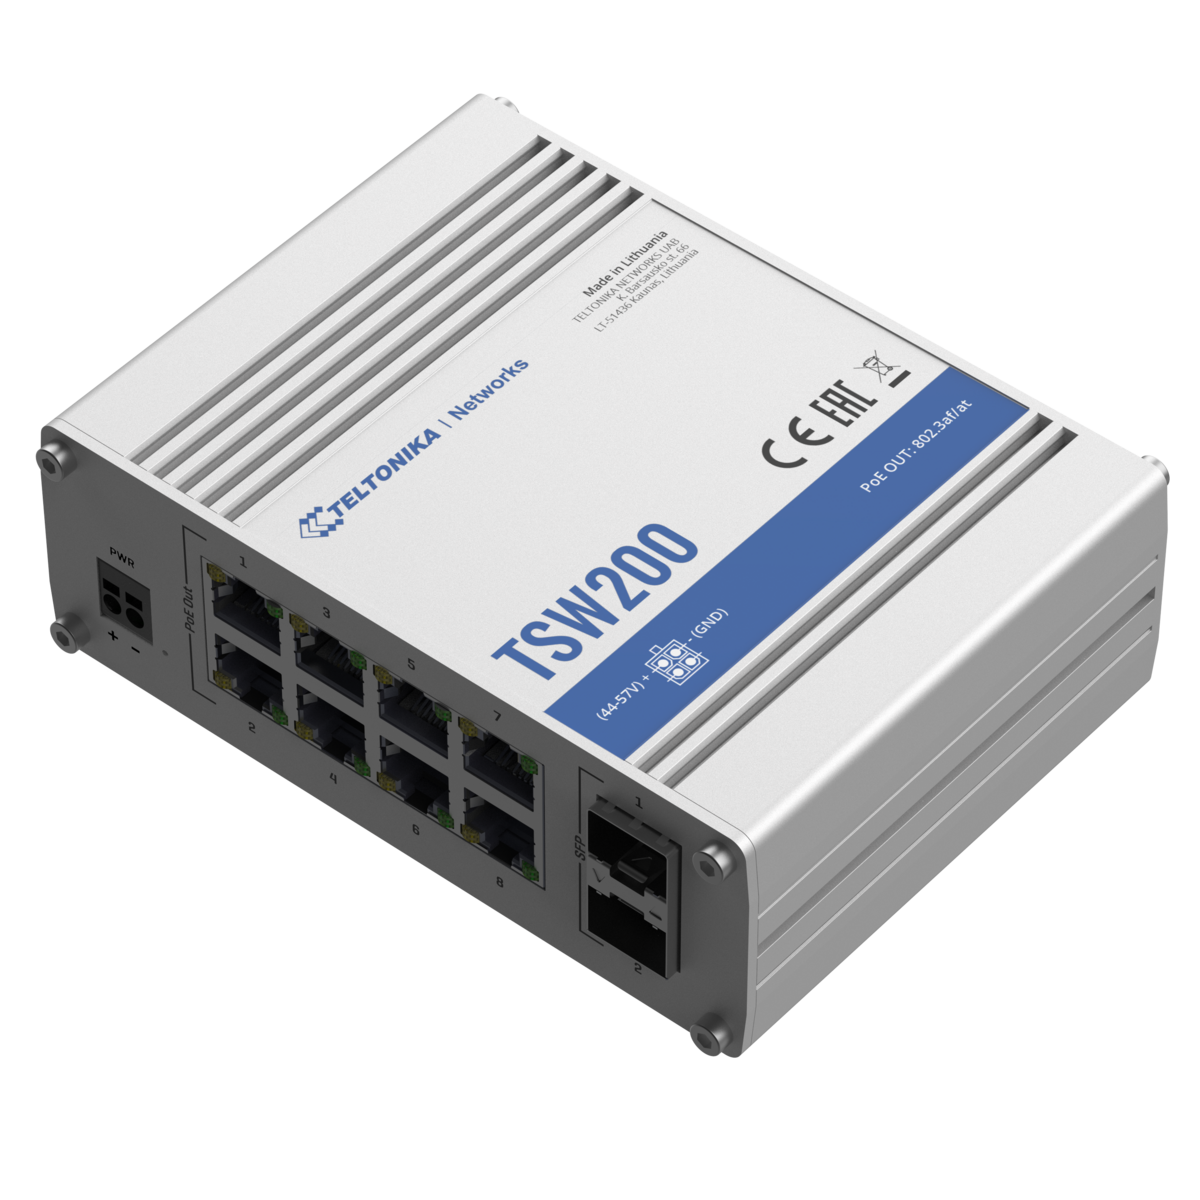 Teltonika TSW 200 - Industrial Ethernet Switch